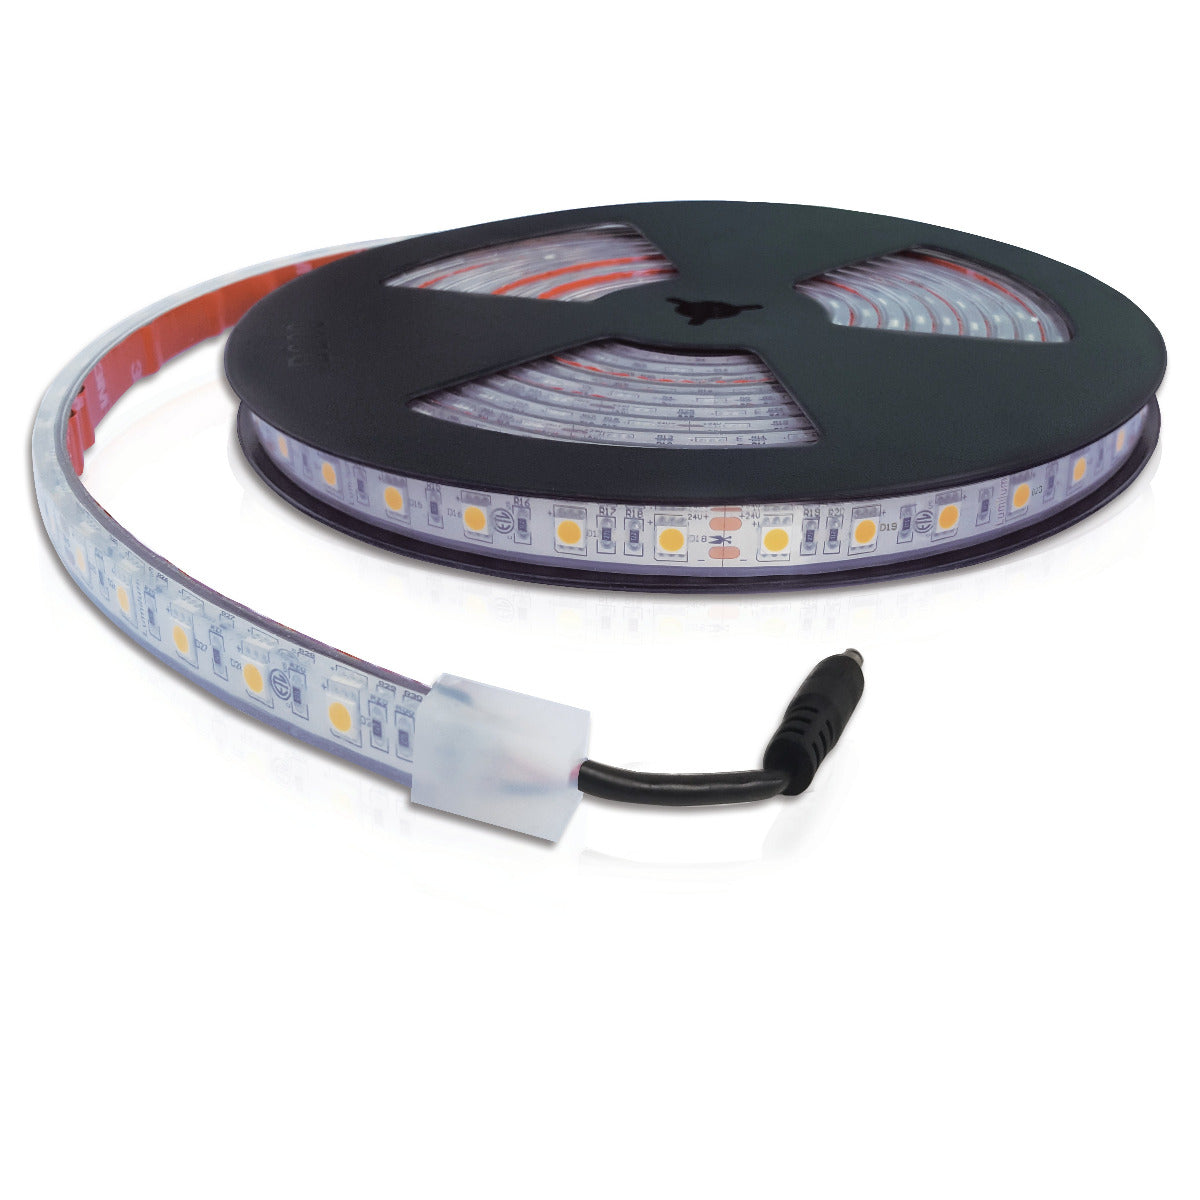 IP67 Waterproof LED Light Strips | from